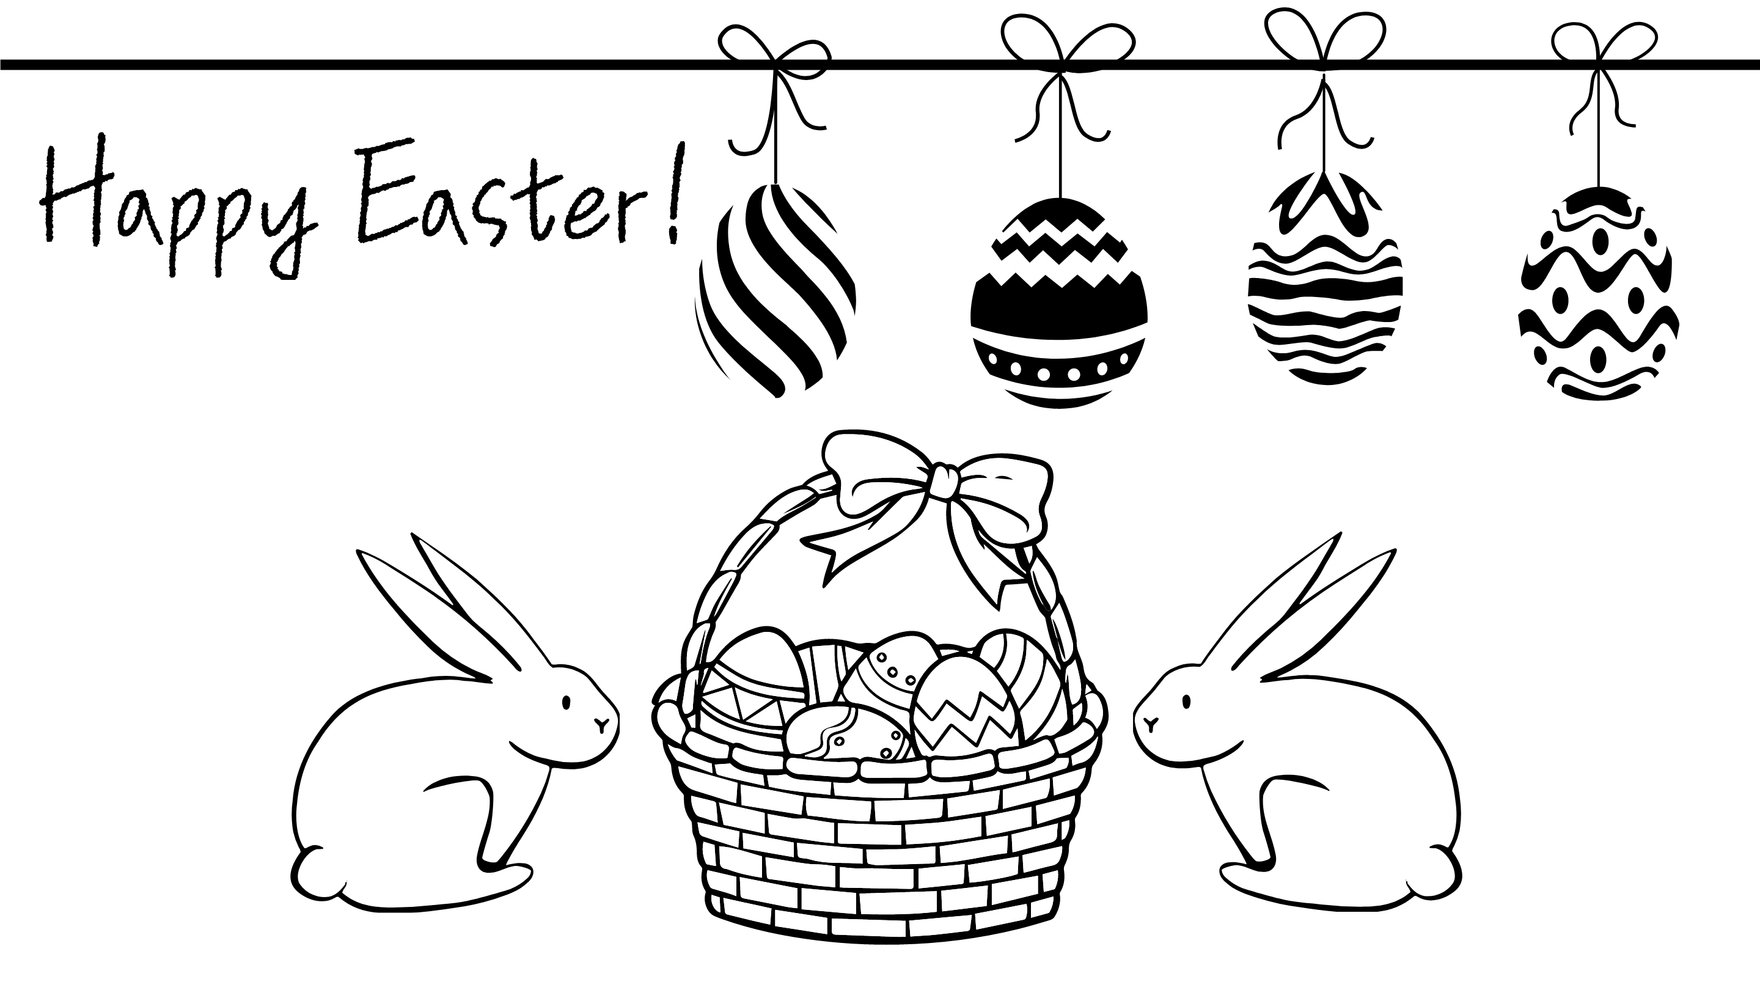 Free Easter Drawing Background in PDF, Illustrator, PSD, EPS, SVG, JPG, PNG